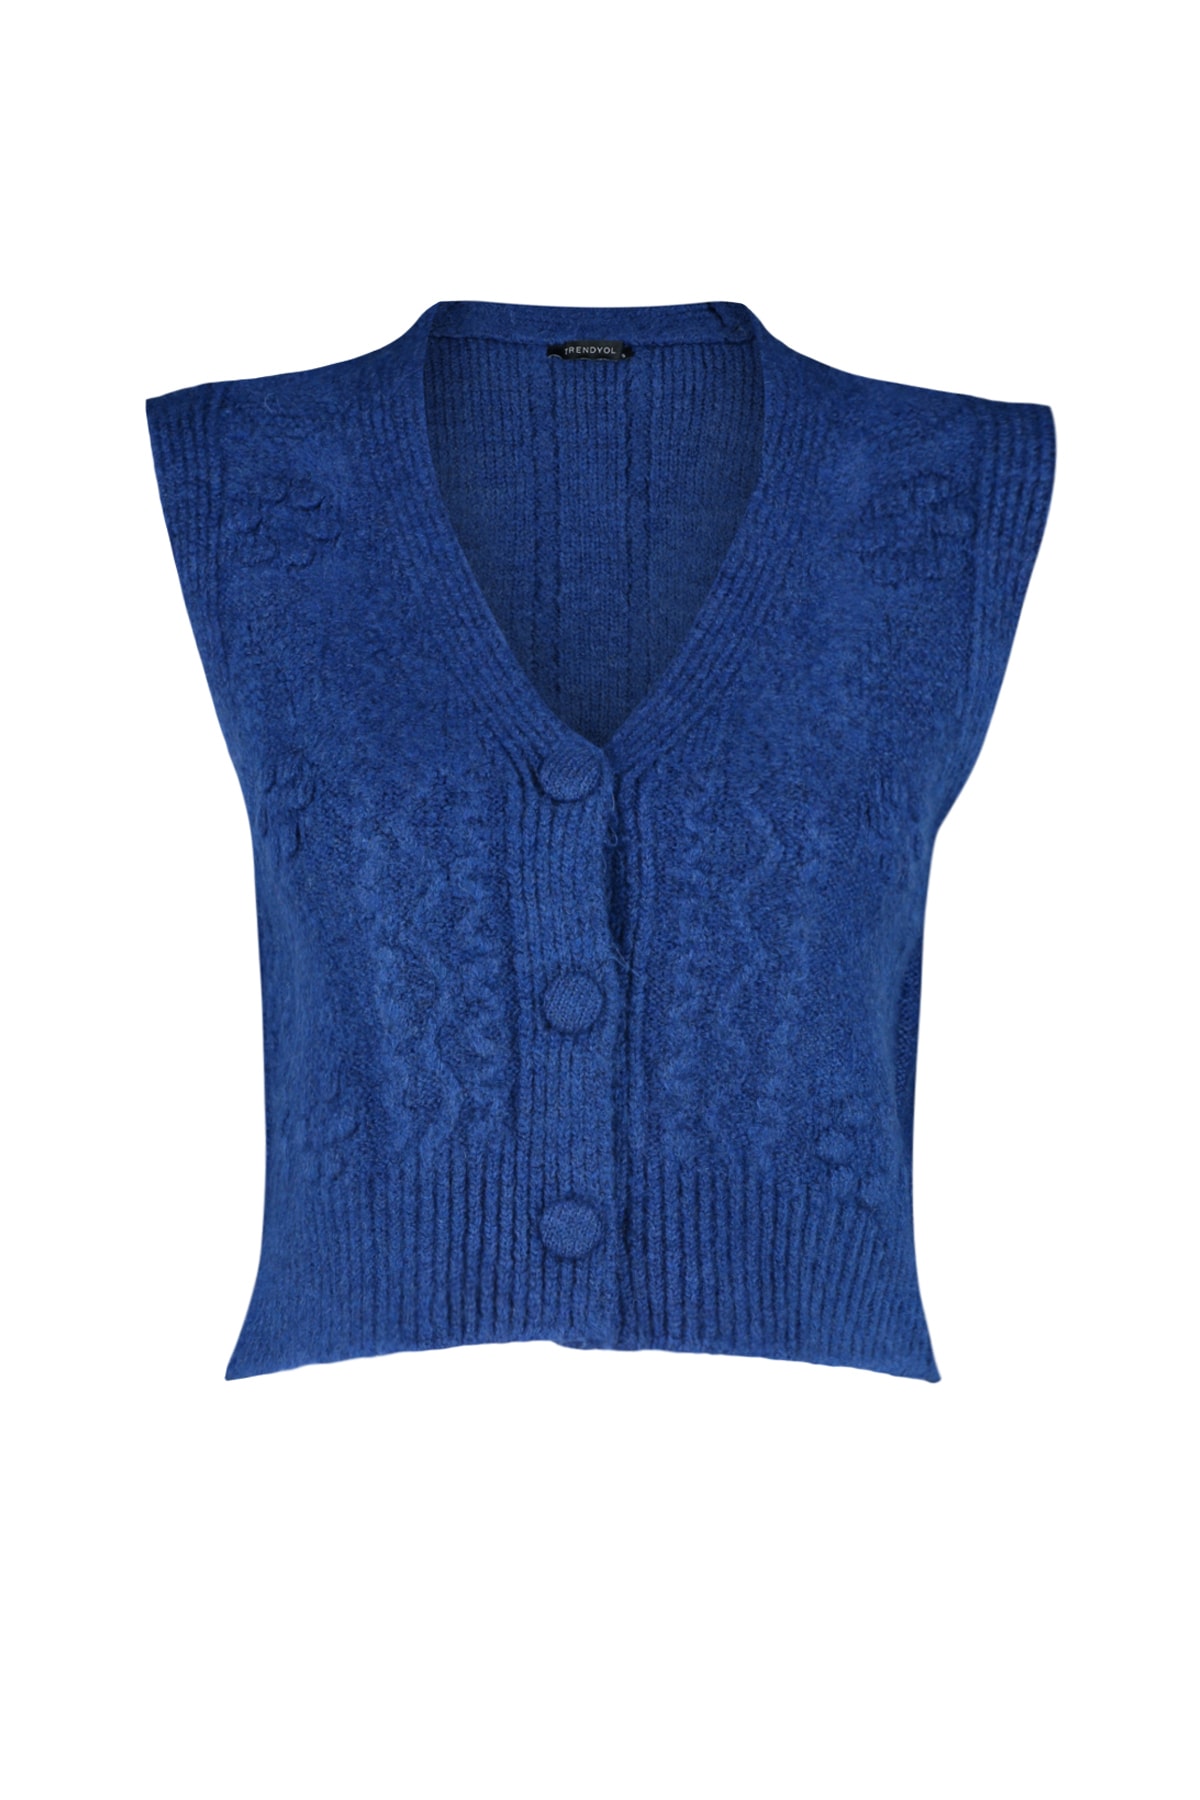 Trendyol Saks Soft Textured Knitwear Sweater